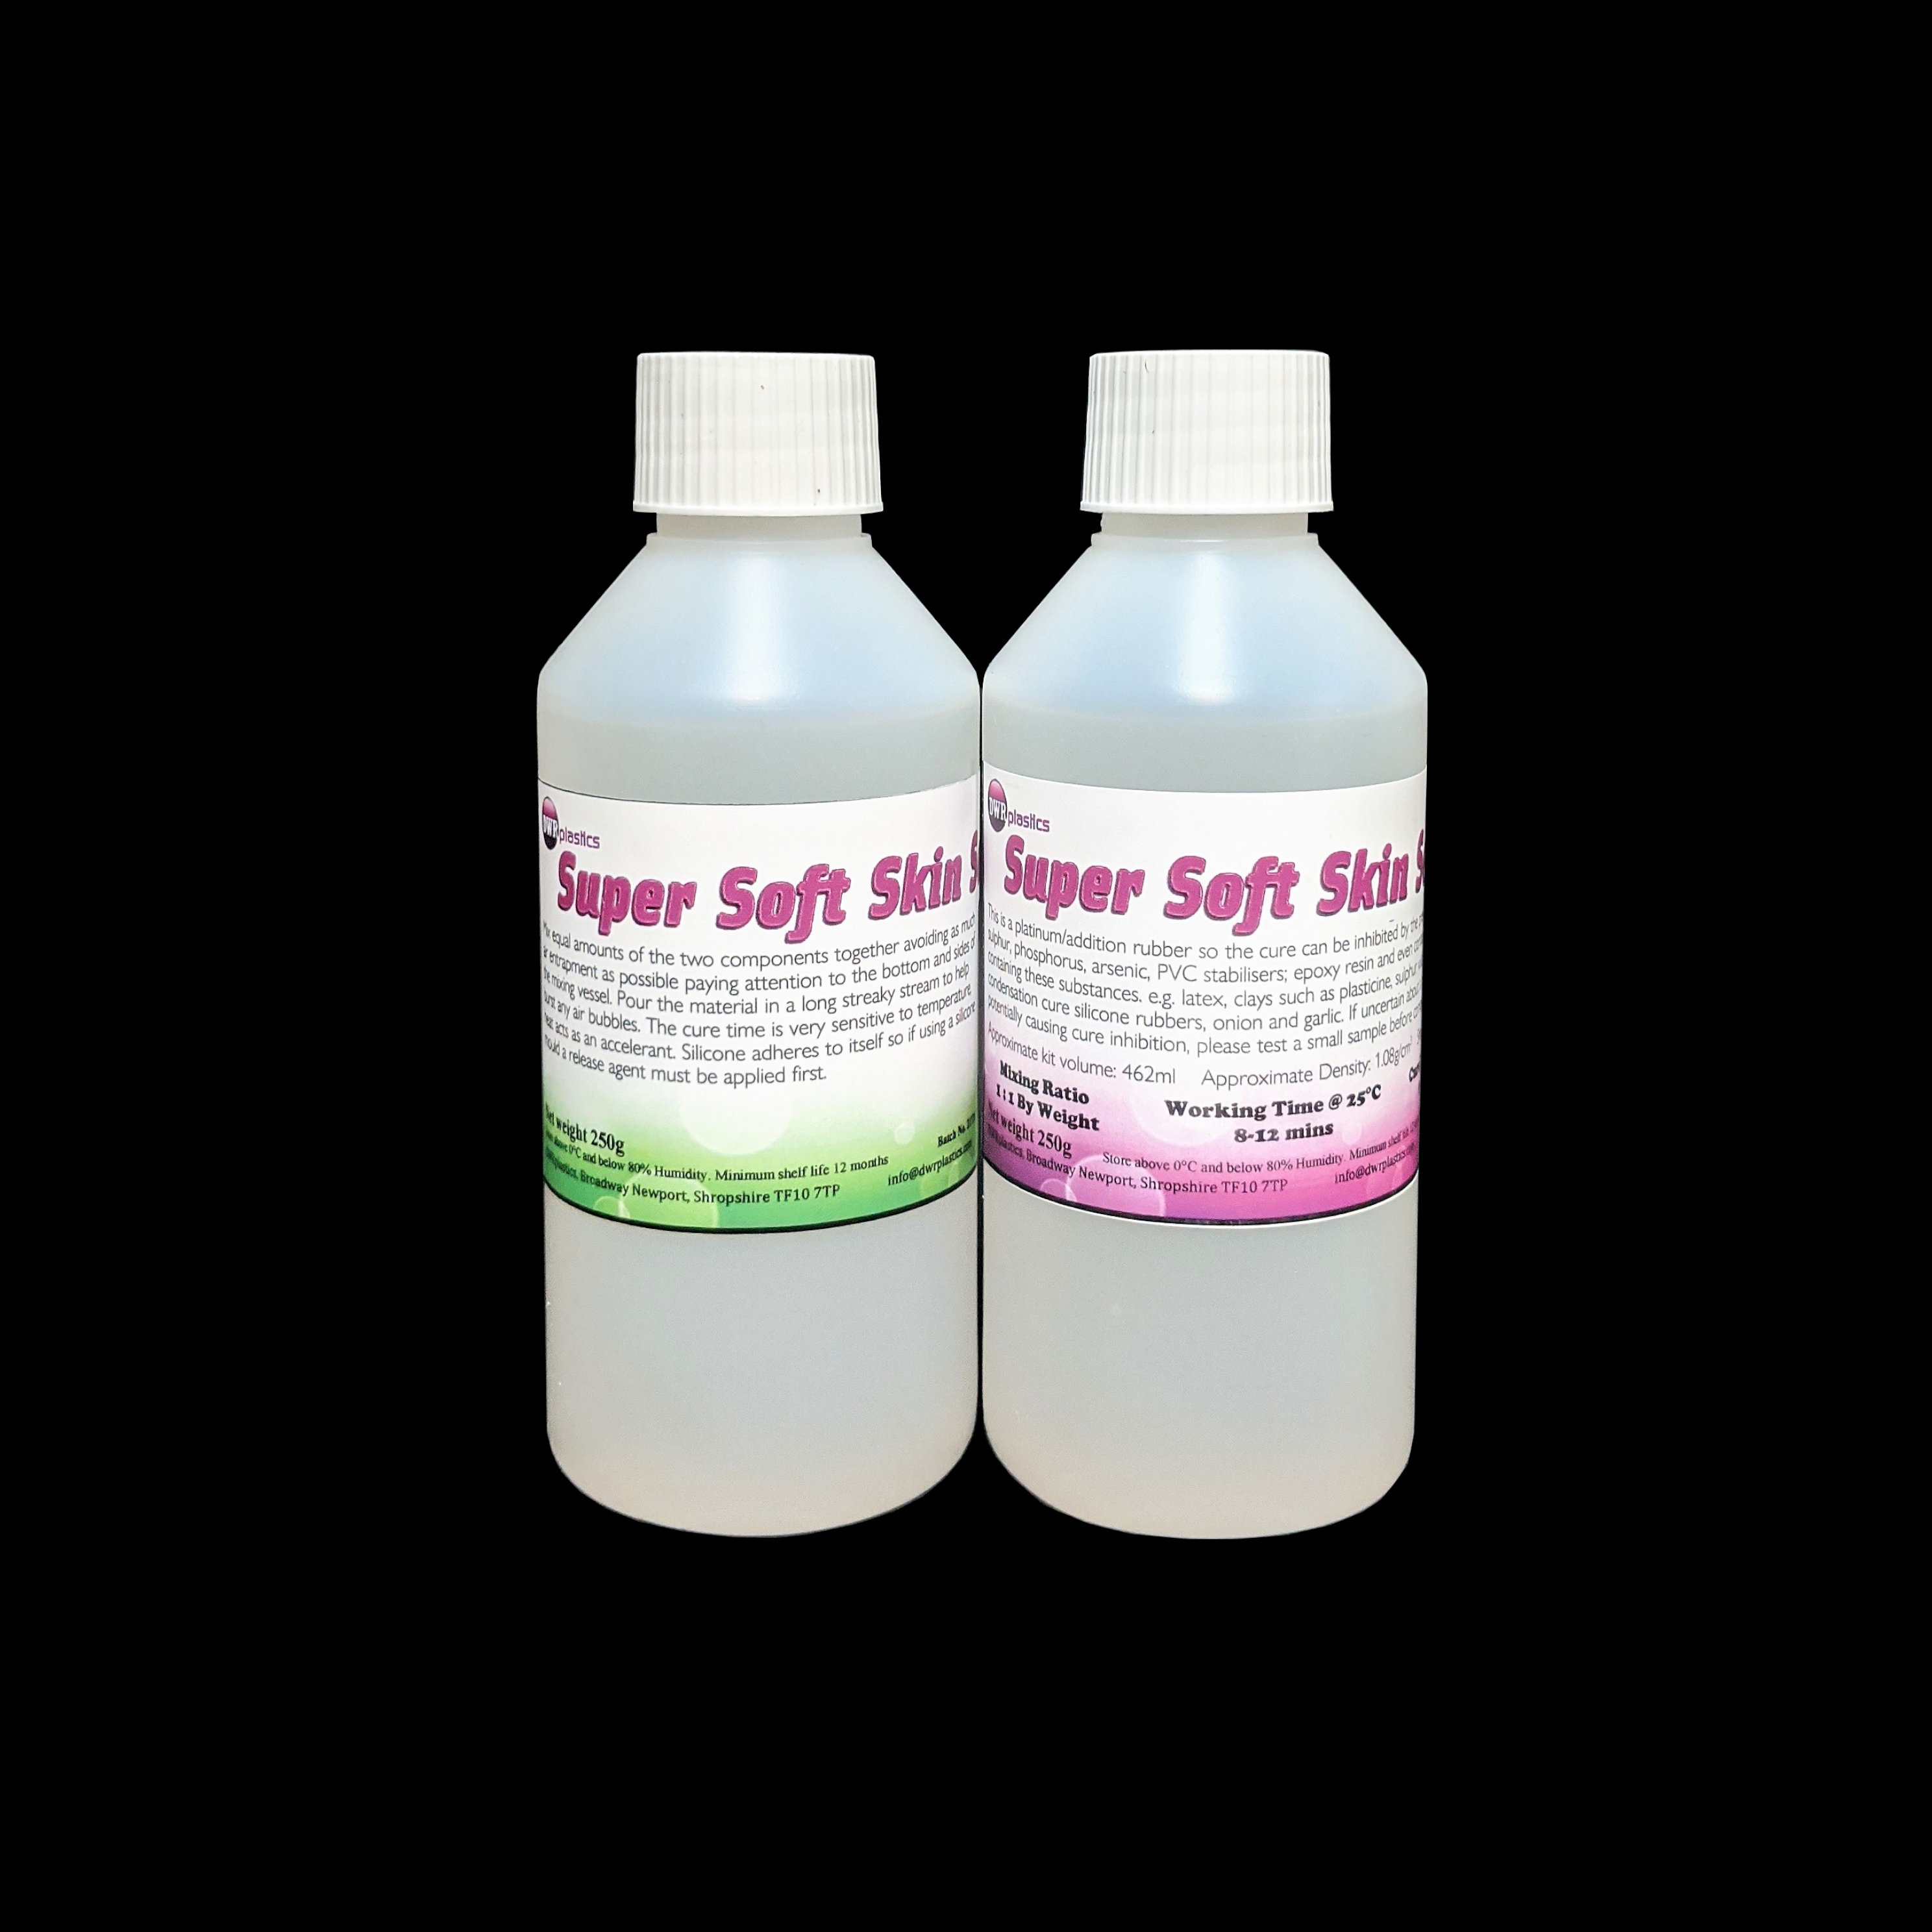 Super Soft Skin Safe Silicone Rubber 500g kit - DWR plastics